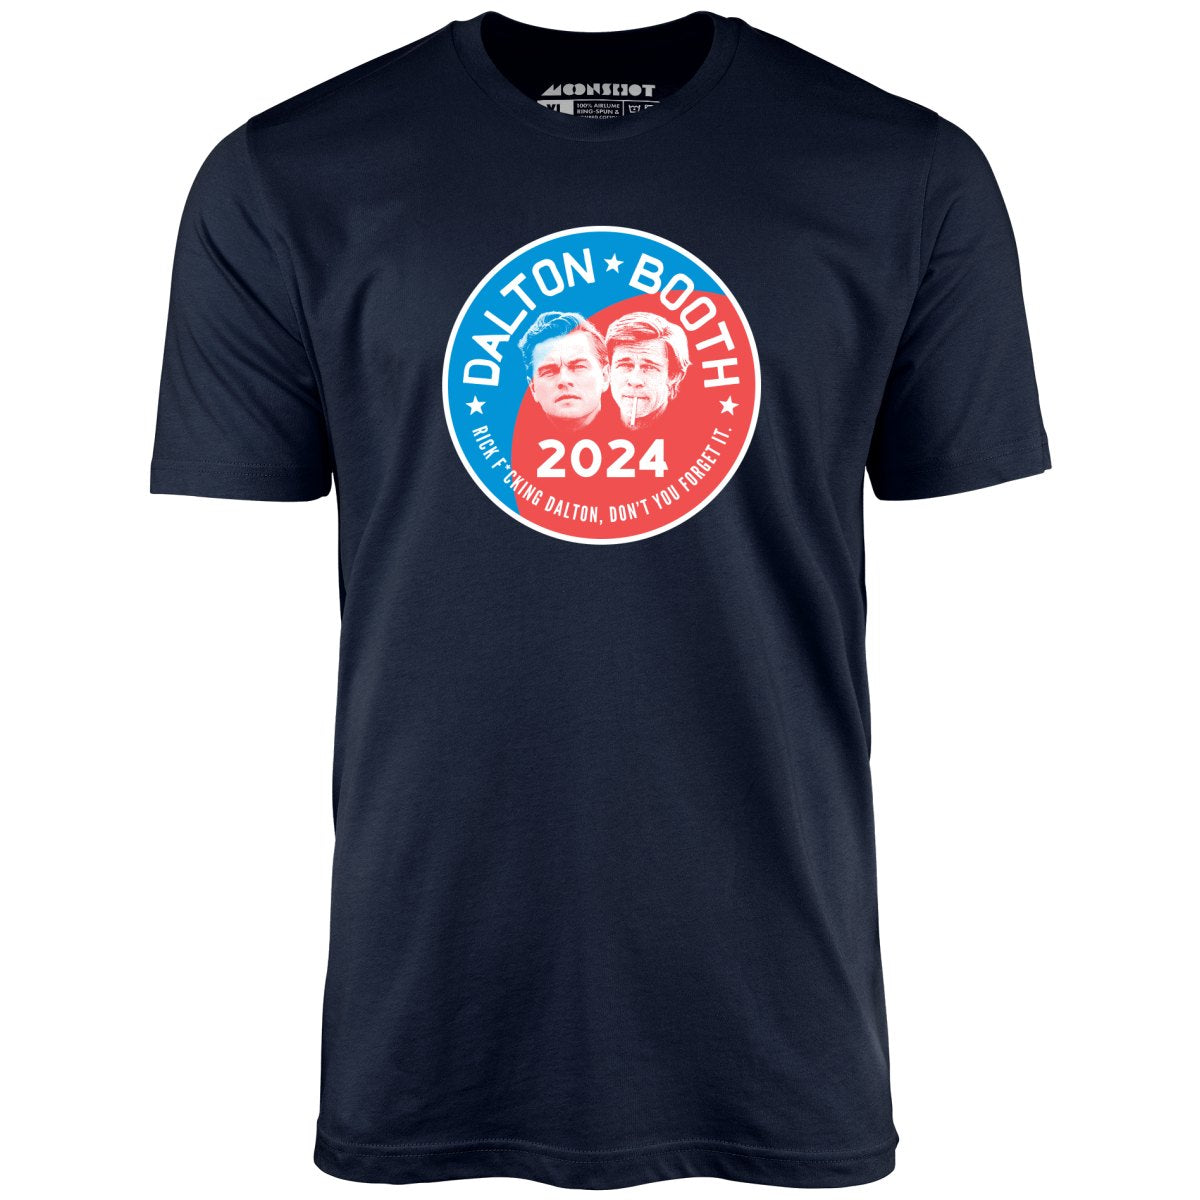 Dalton Booth 2024 - Unisex T-Shirt